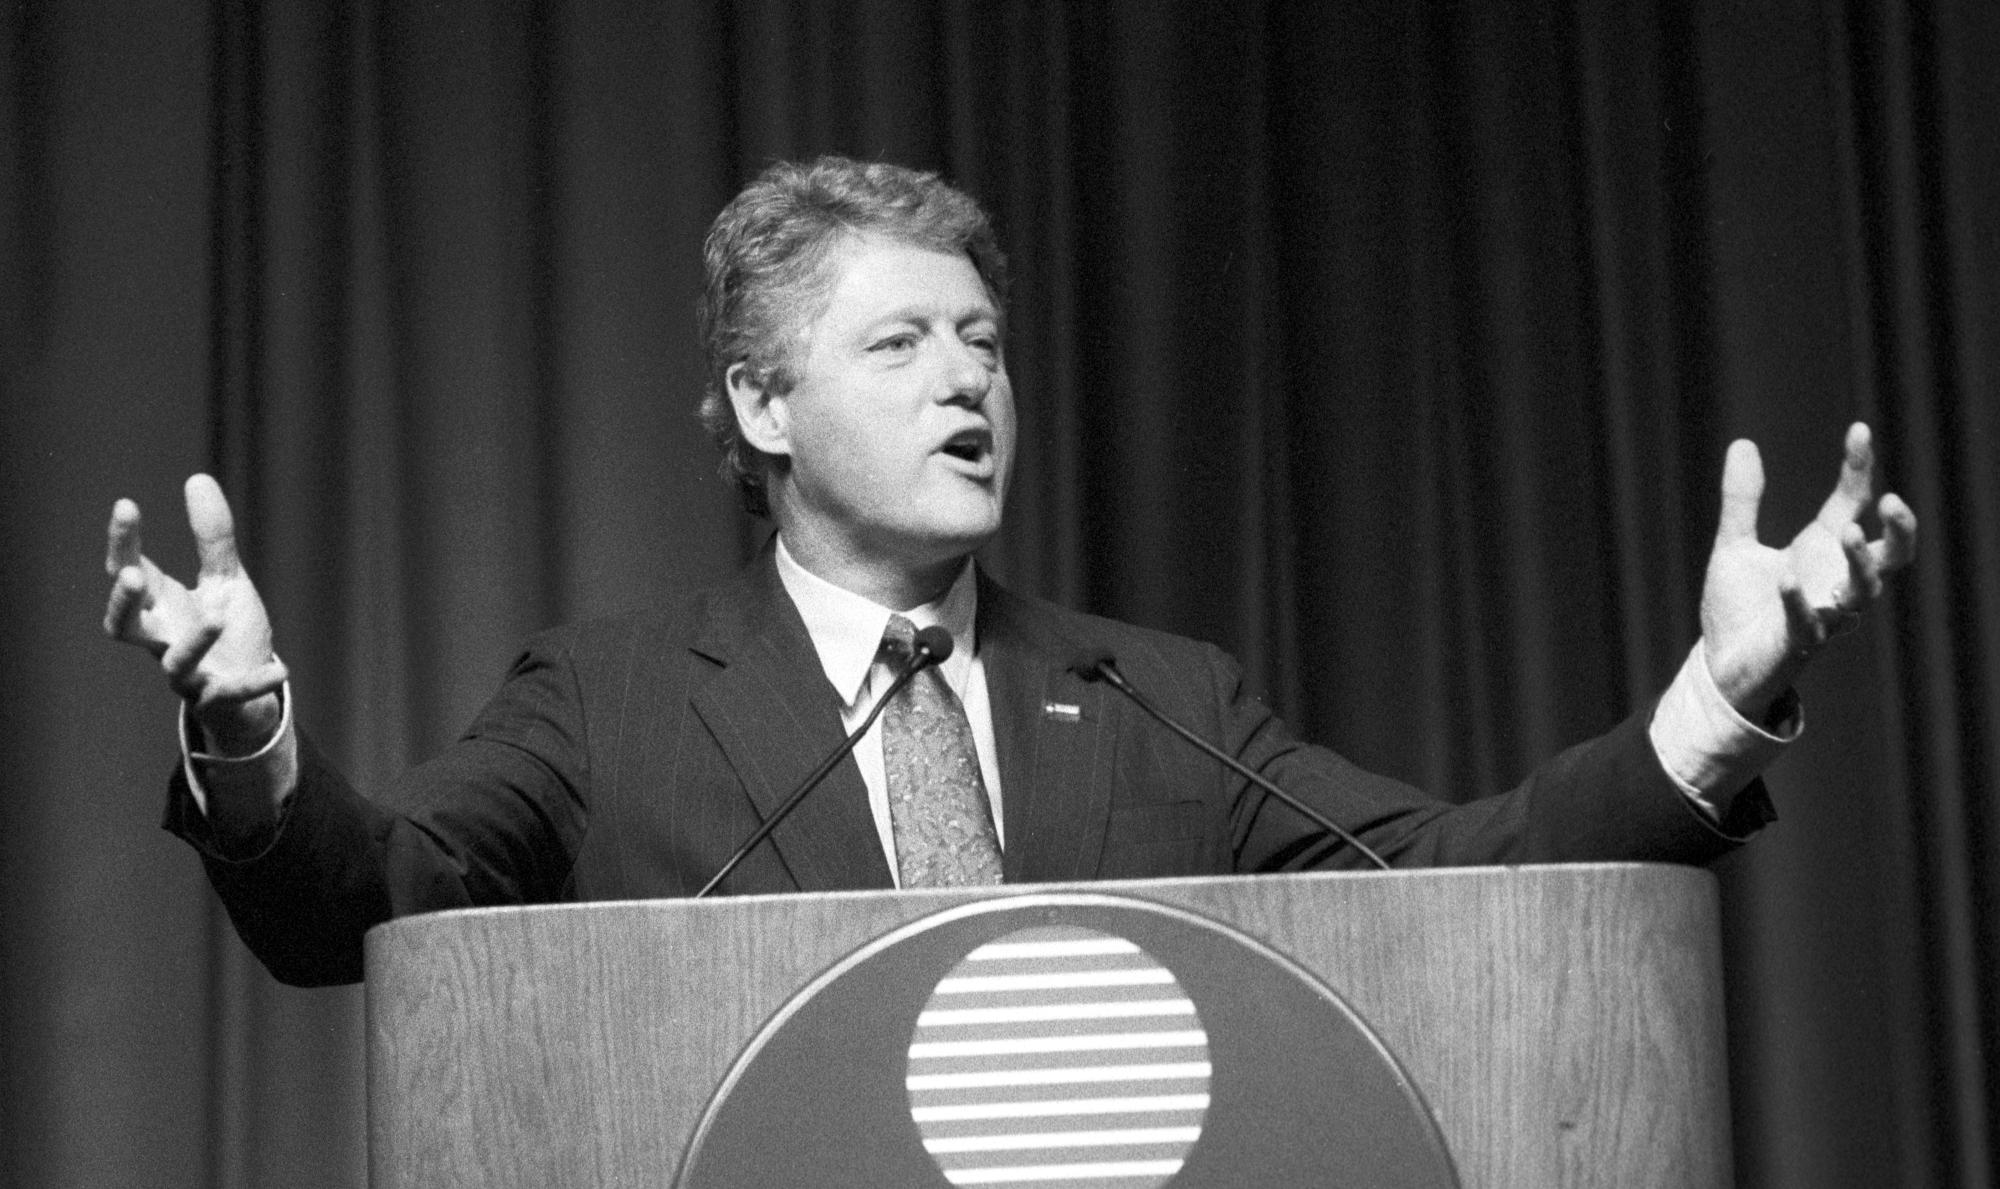 Daily Texan (1991-1992) - Bill Clinton #1